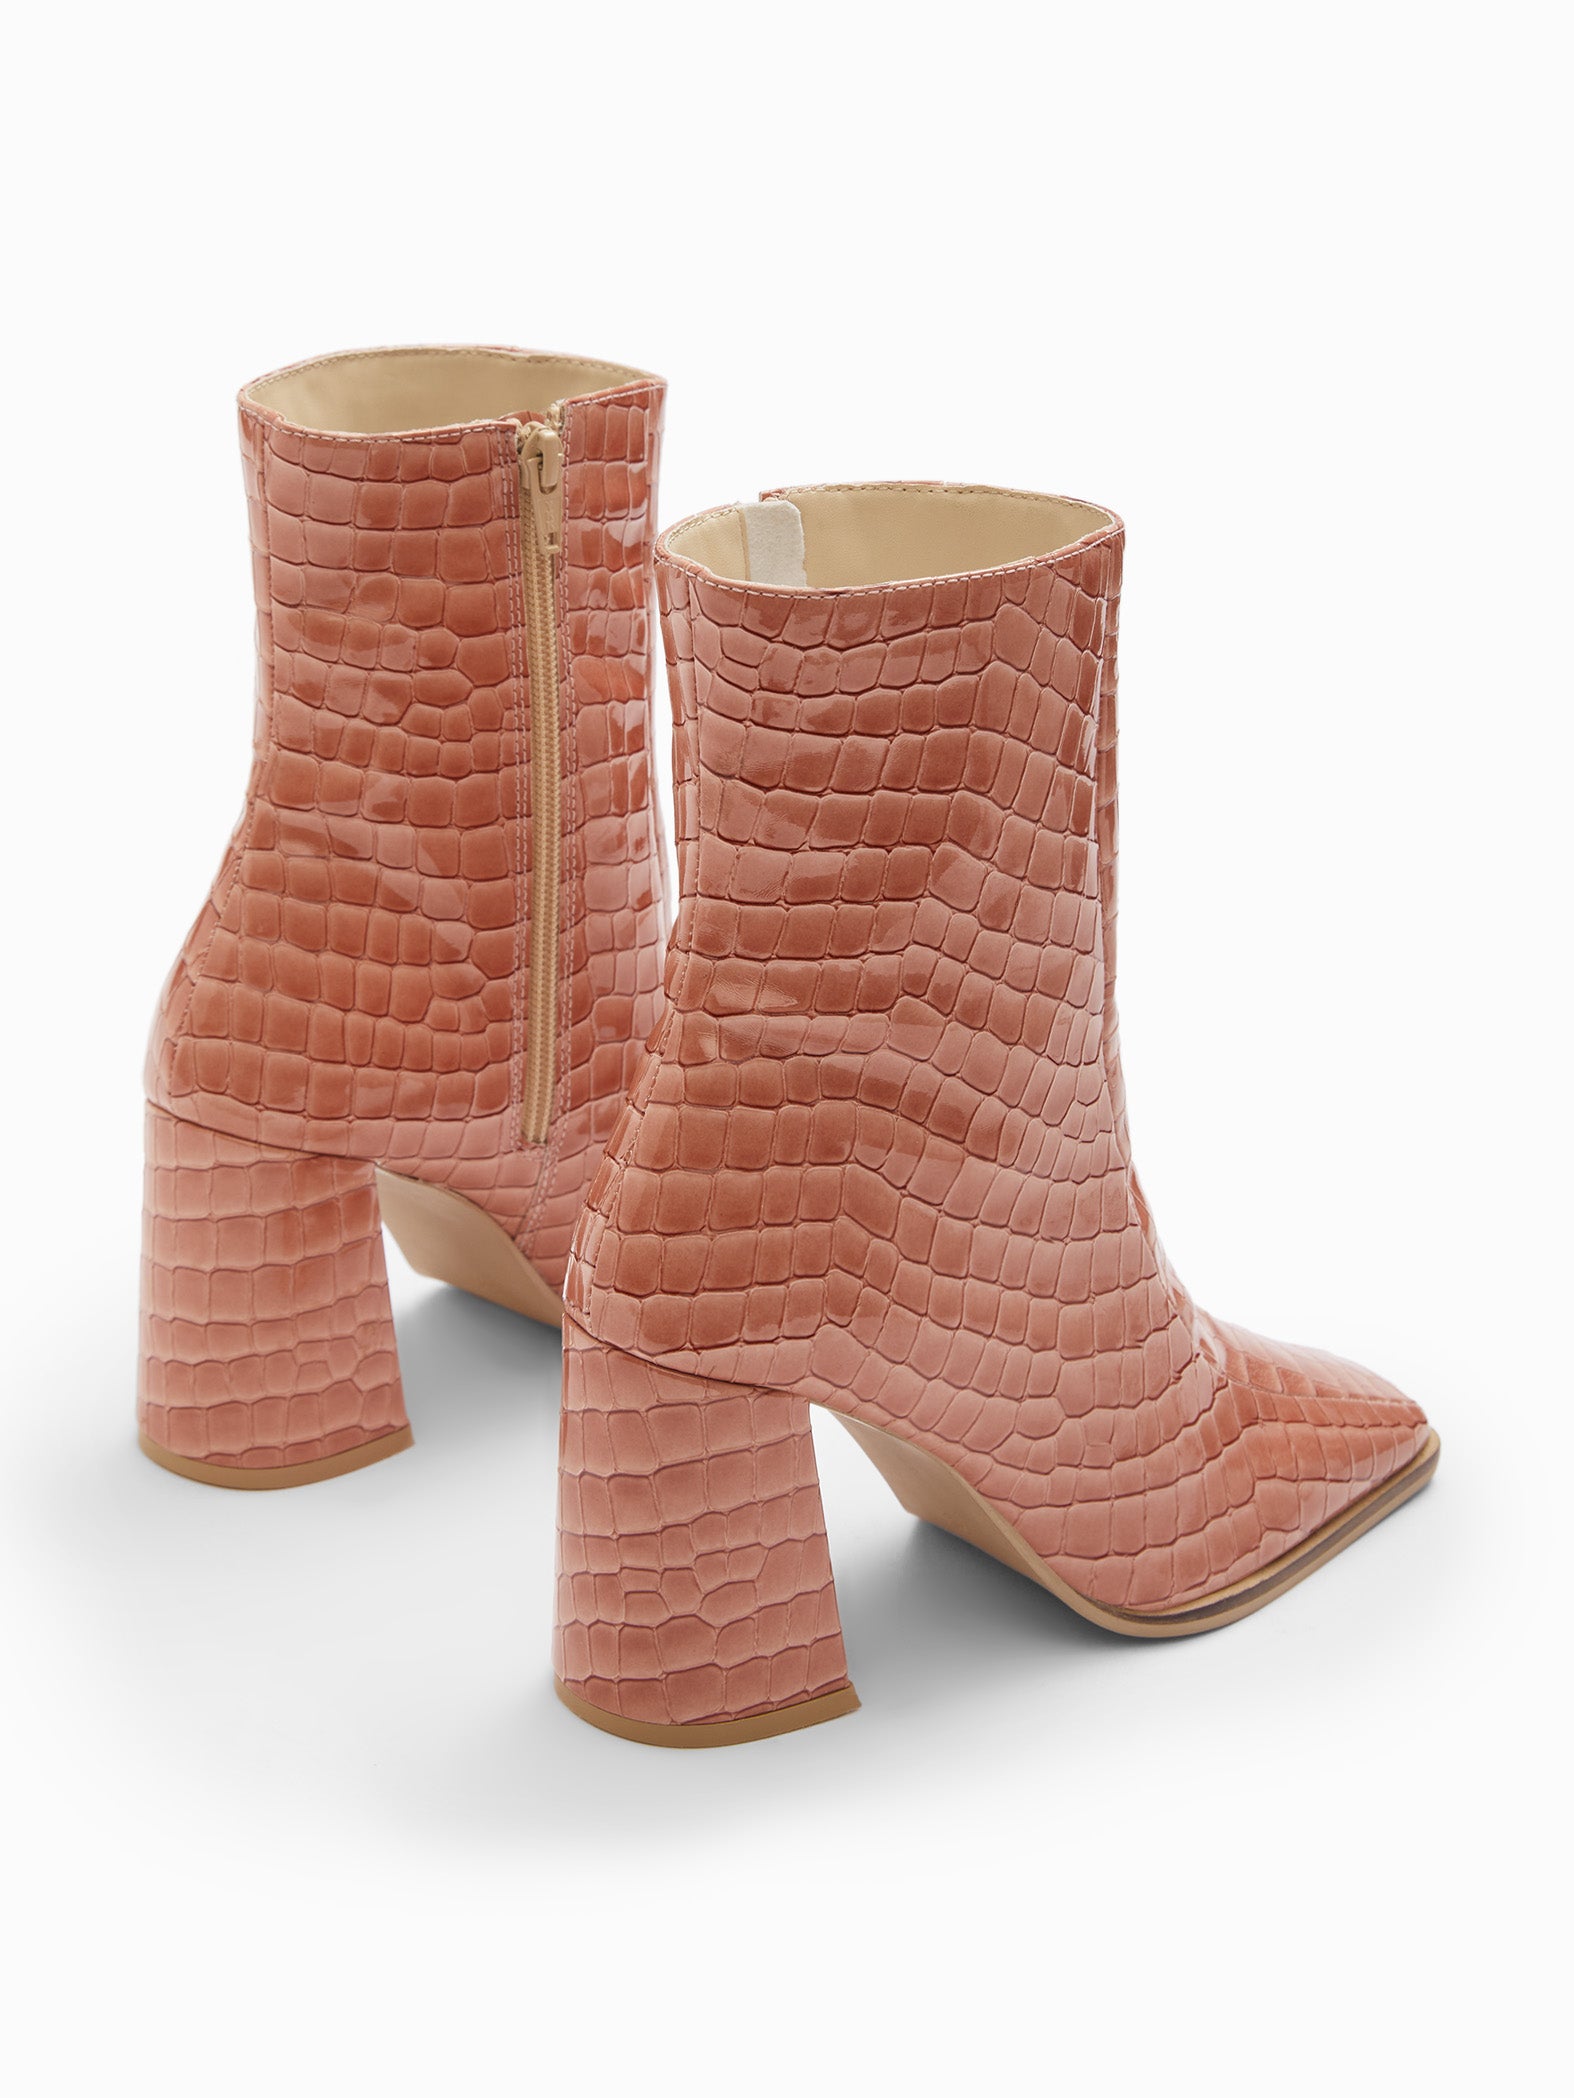 Brick Textured Heeled Boots